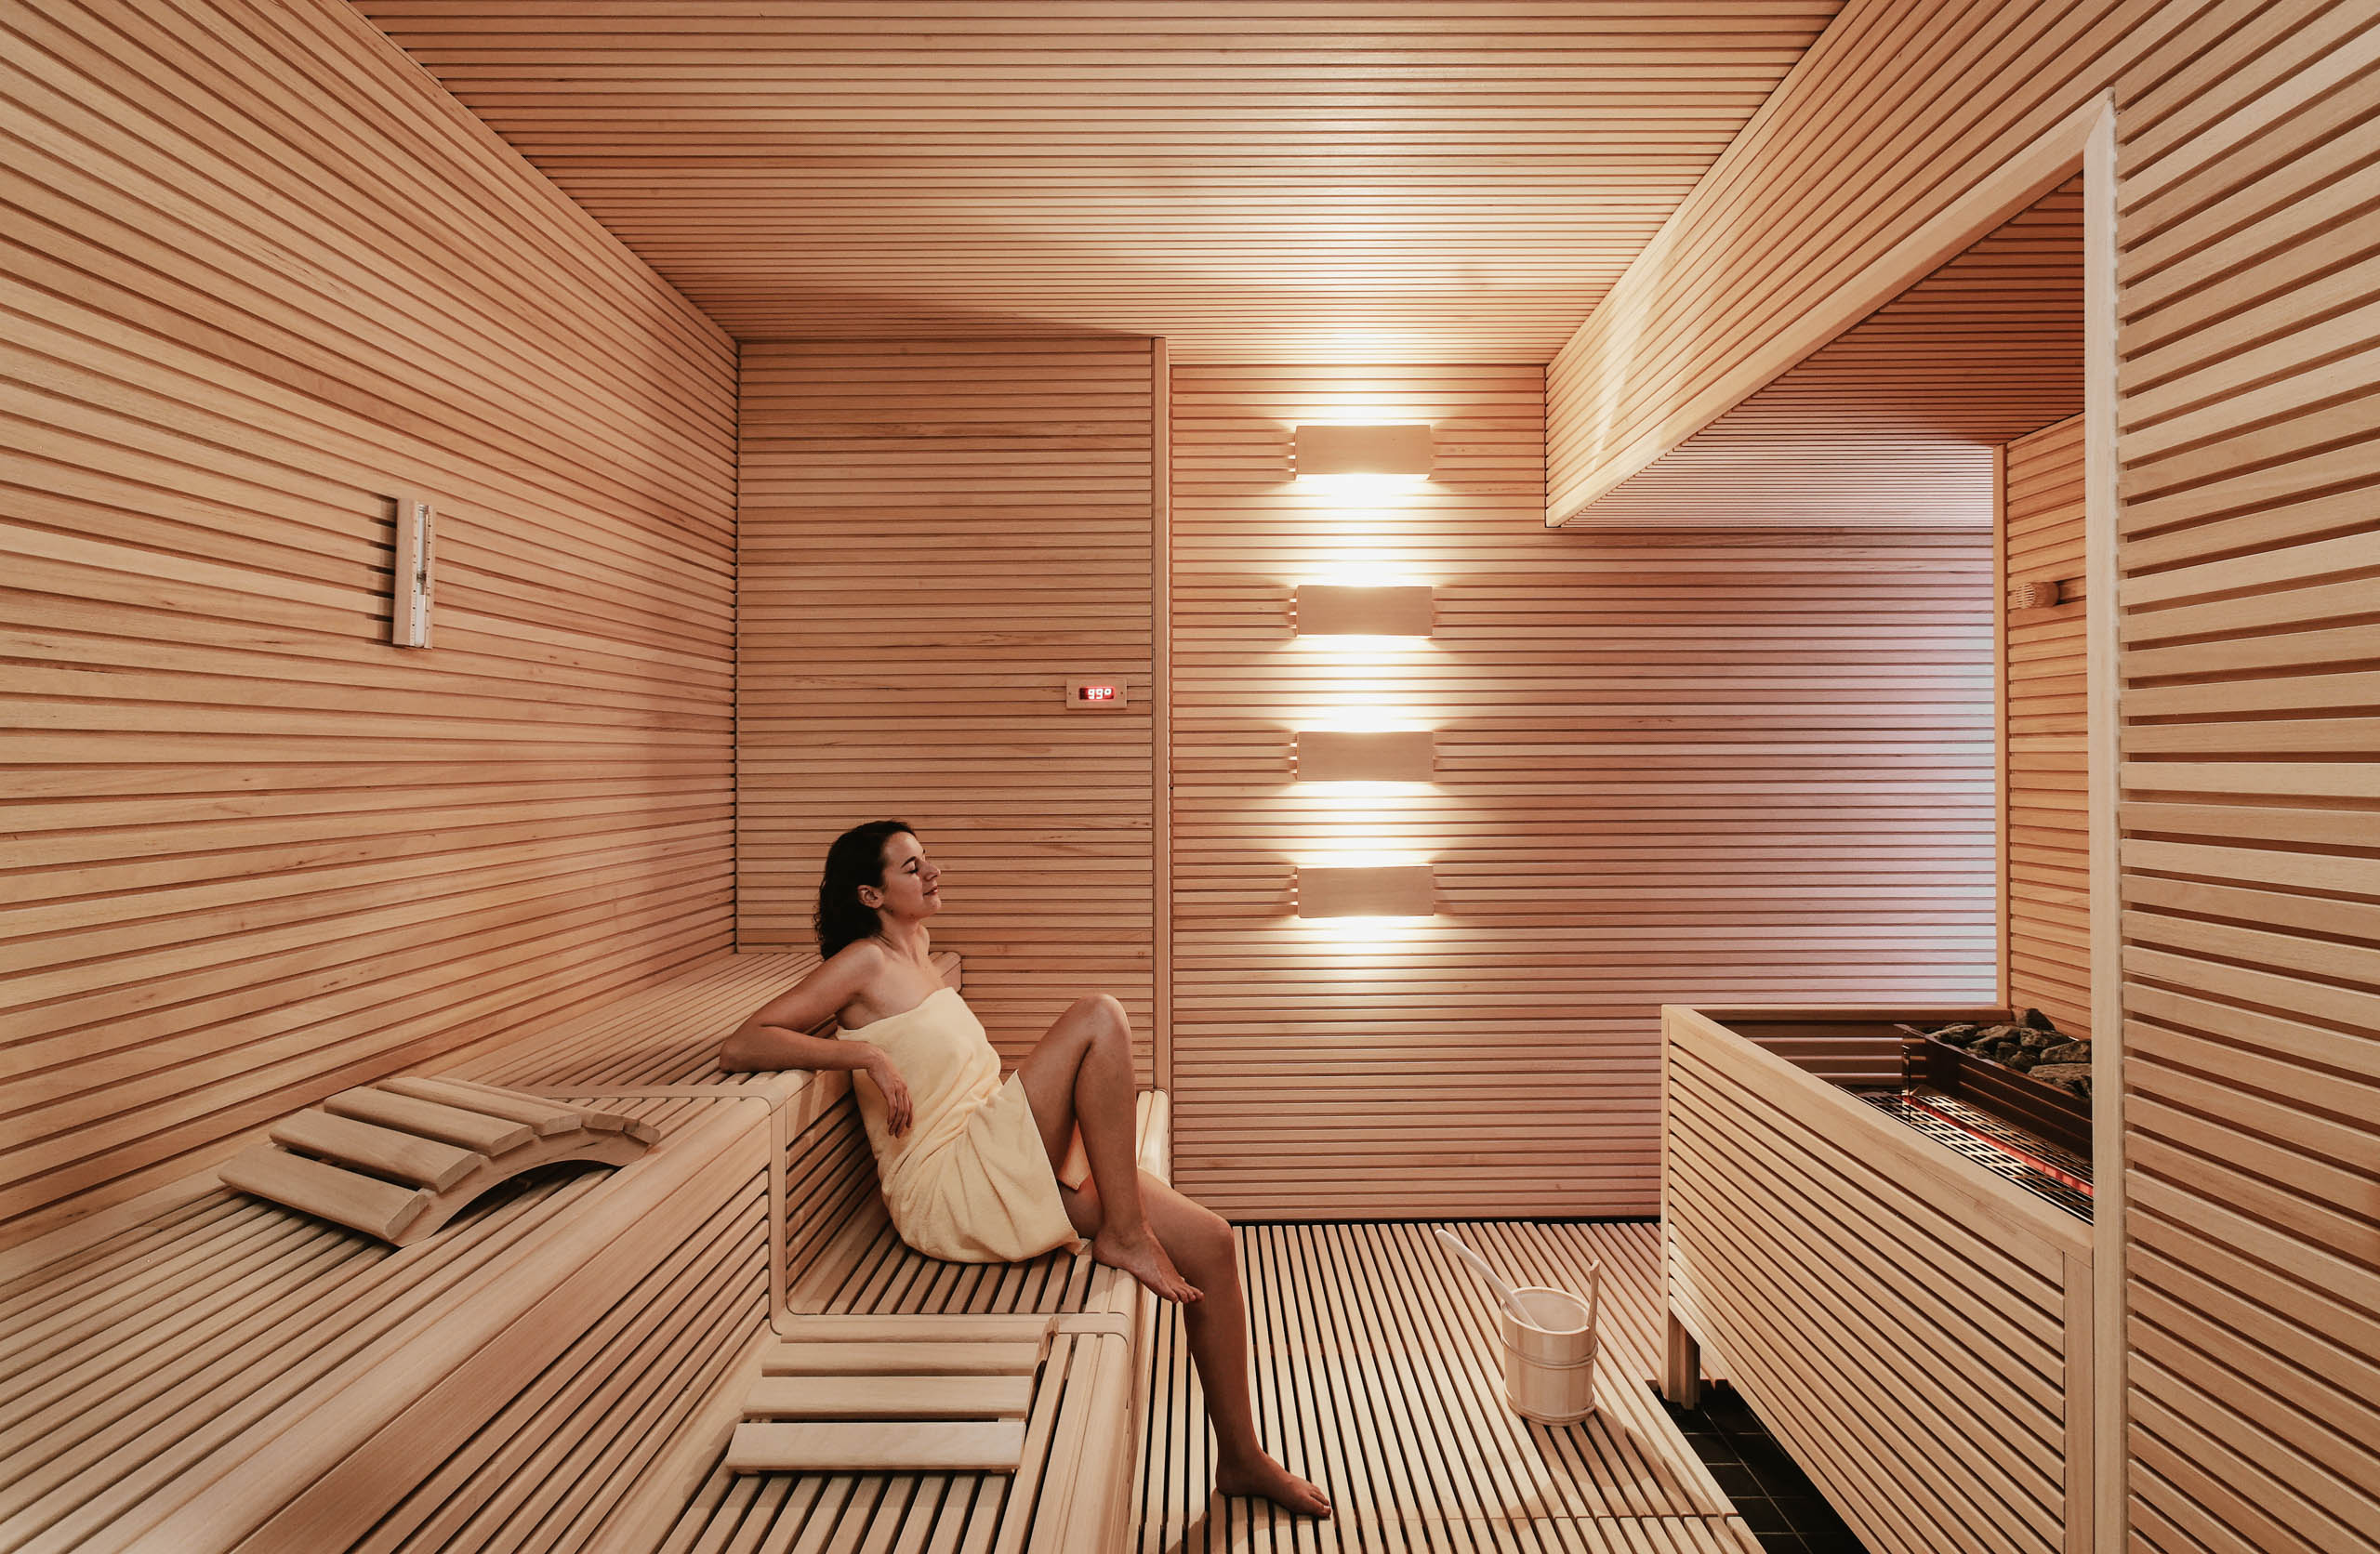 Swiss Deluxe Hotels Stories Winter 2021 Precious Moments 02 Spa Sauna Bearb Ecirgb